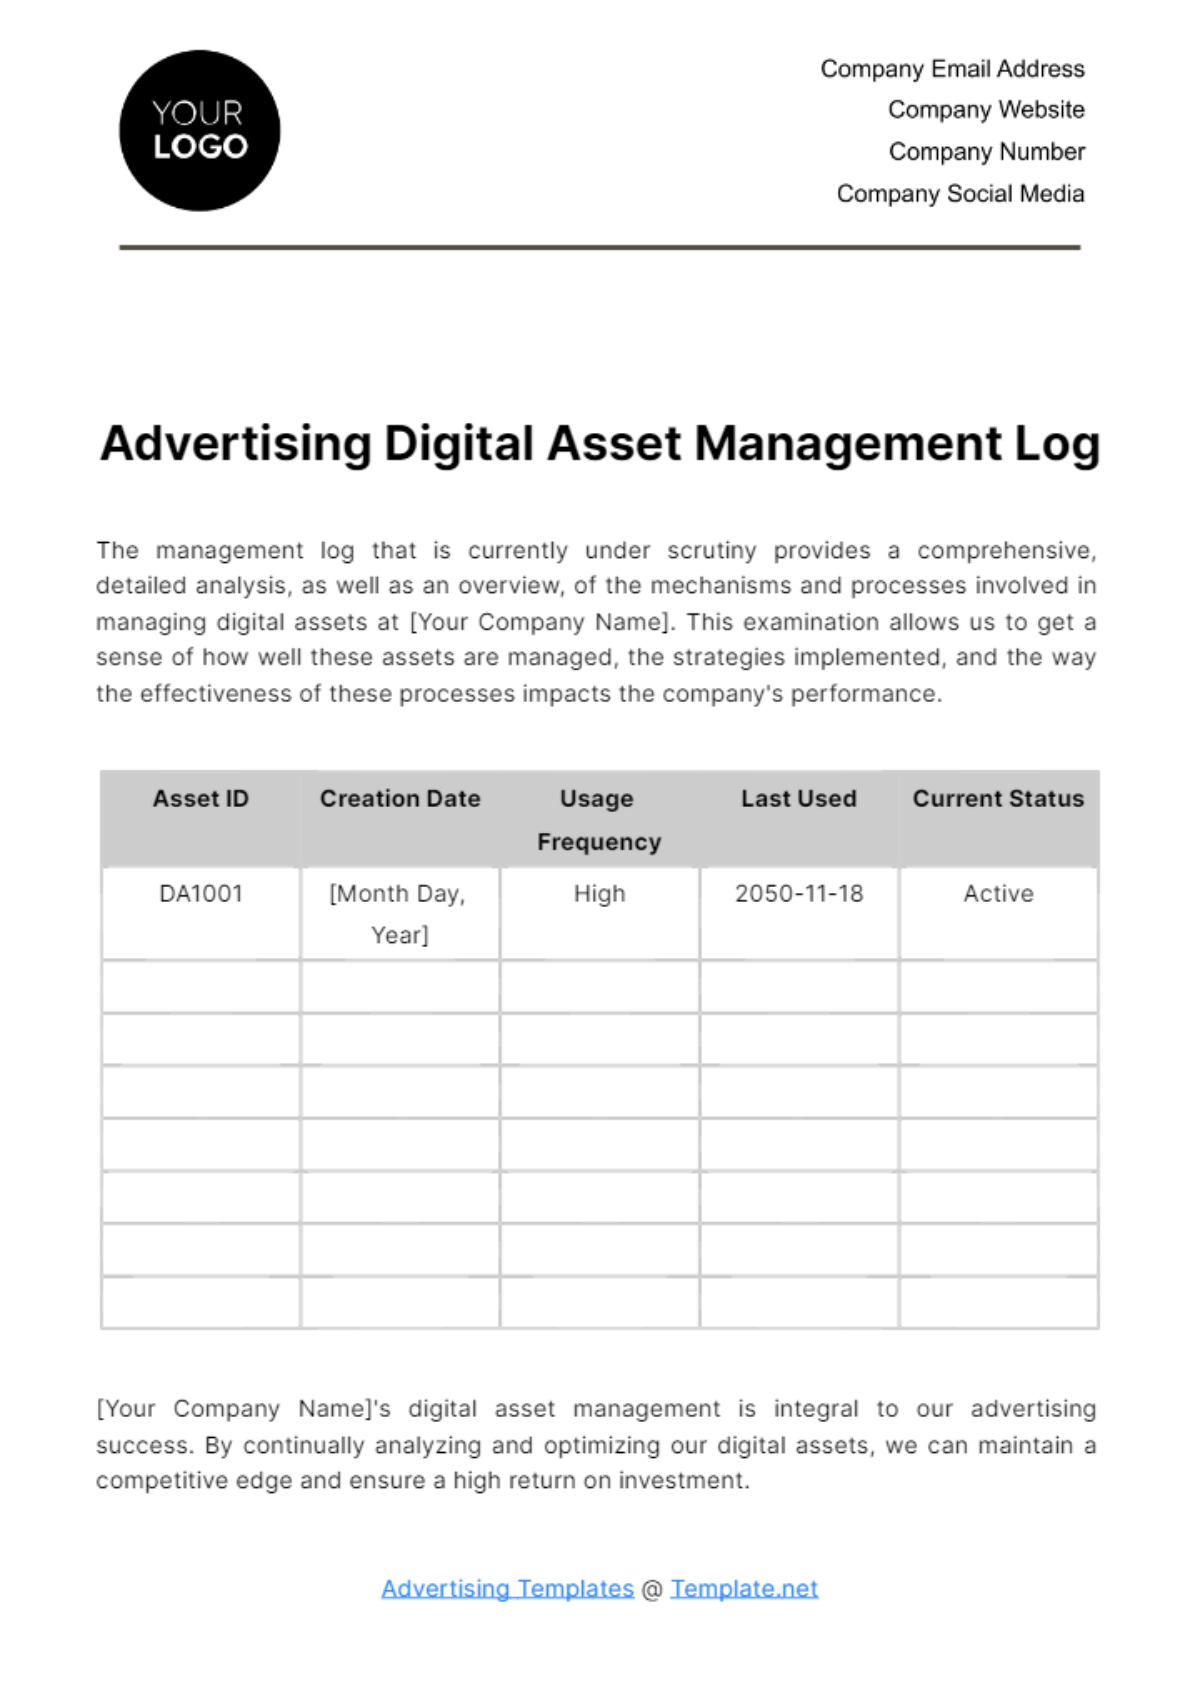 Advertising Digital Asset Management Log Template